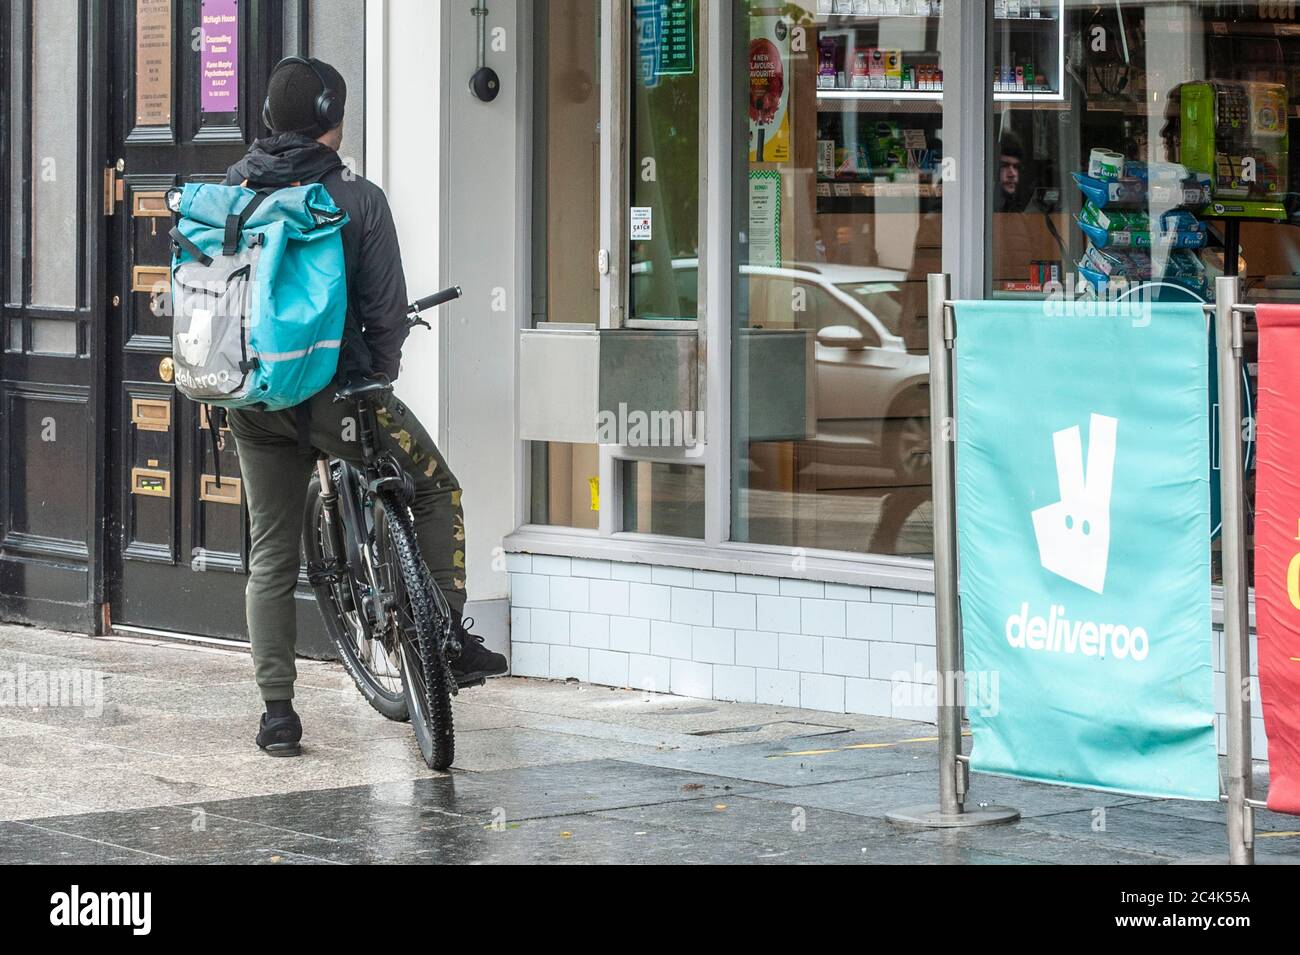 Deliveroo Food Delivery Rider in attesa di un ordine accanto a un cartello pubblicitario Deliveroo a Cork City, Irlanda. Foto Stock